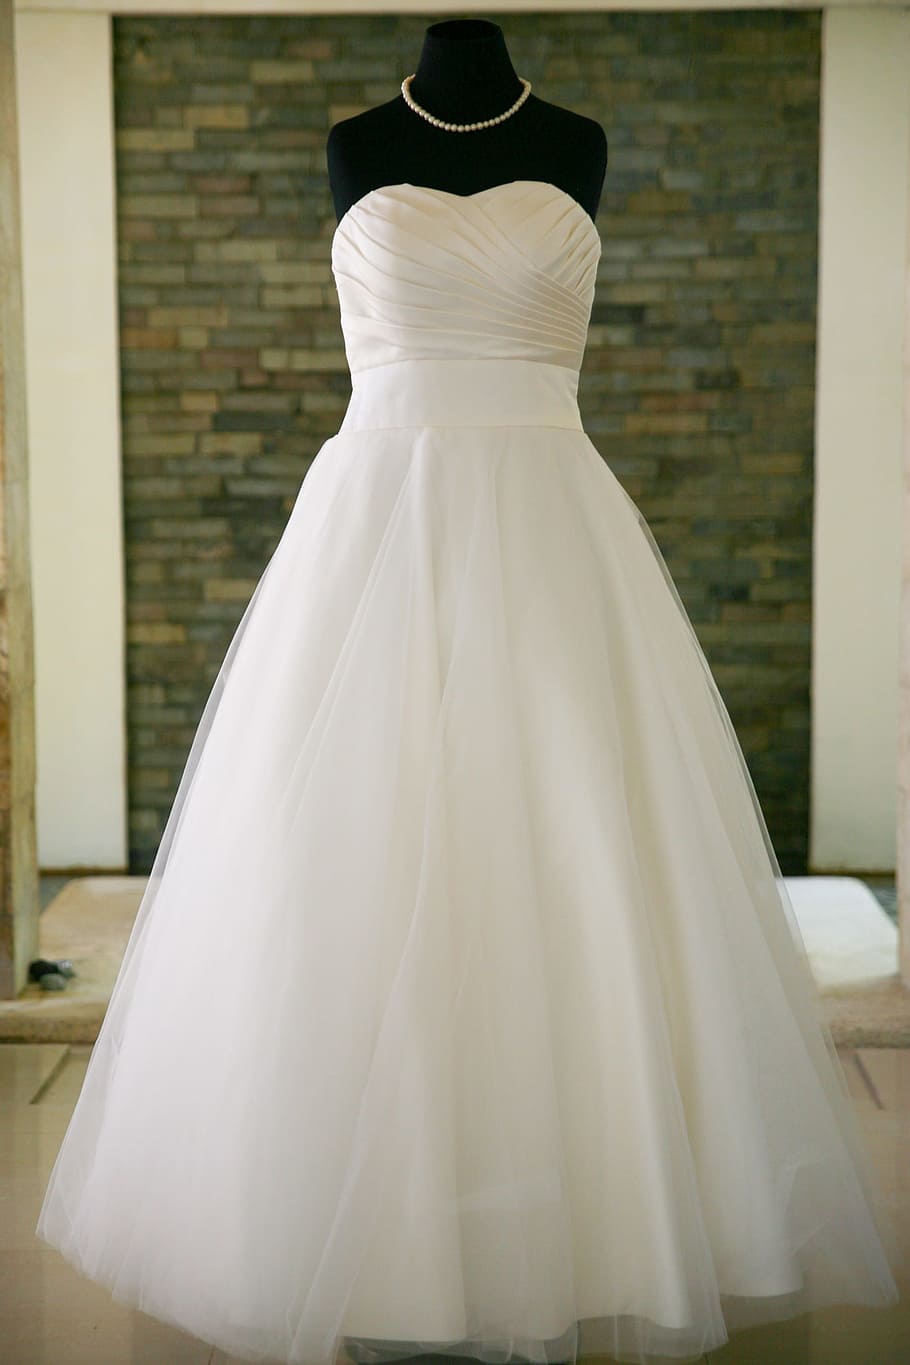 gaun pengantin, putih, pernikahan, gaun, perayaan, acara, pengantin baru, mode, pengantin, pakaian